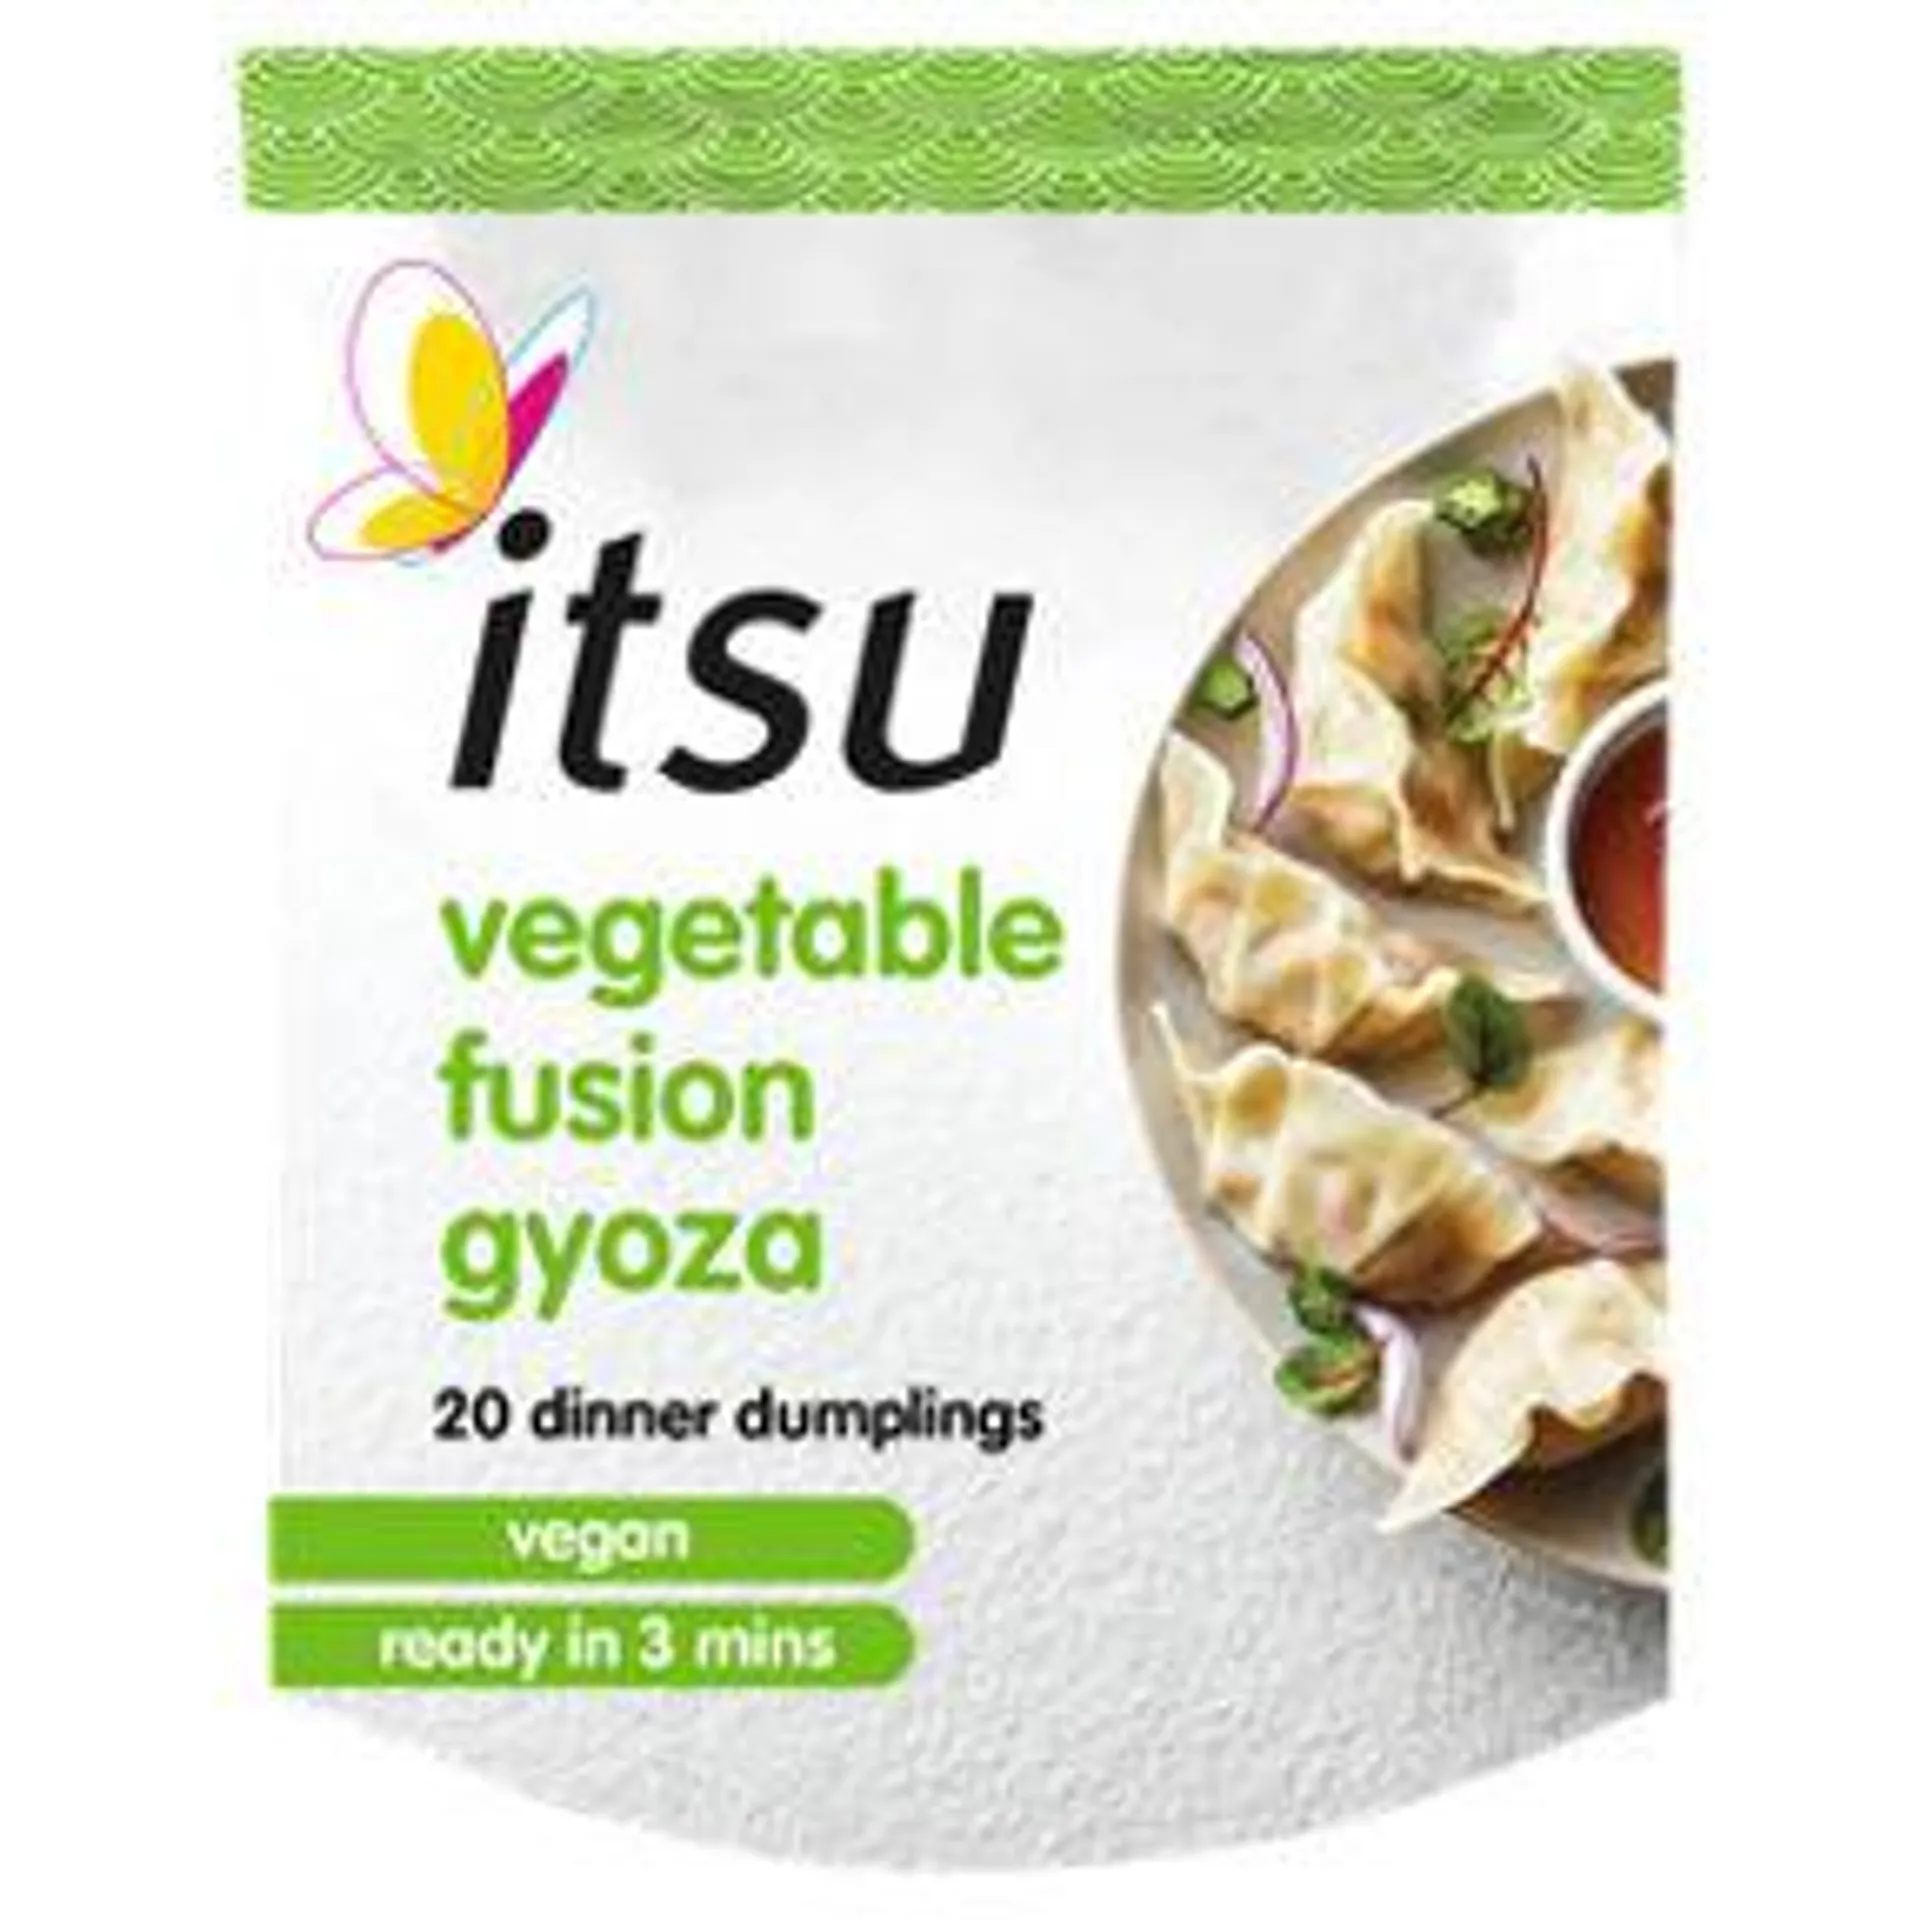 Itsu Vegetable Fusion Gyoza 20 Dinner Dumplings